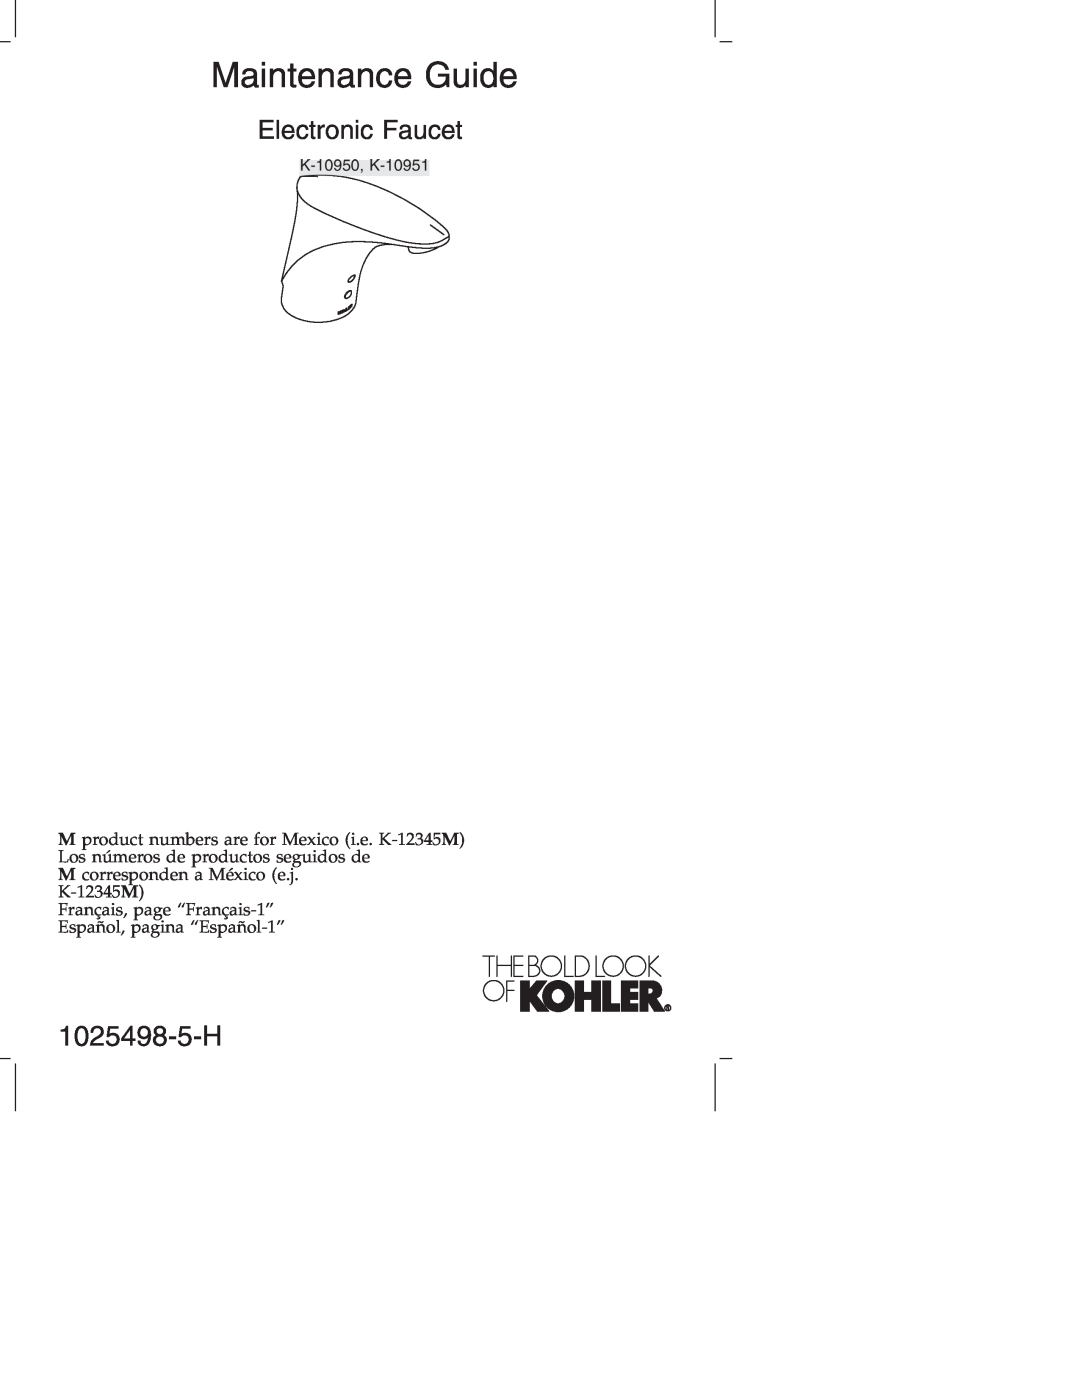 Kohler k-10951, k-10950 manual 1025498-5-H, Maintenance Guide, Electronic Faucet 